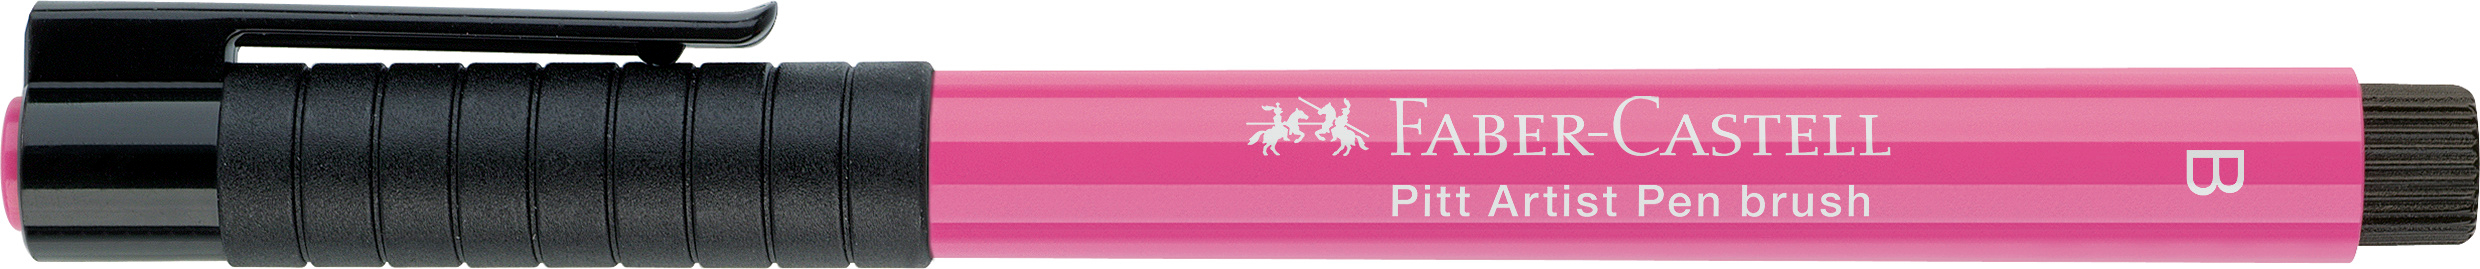 FABER-CASTELL Pitt Artist Pen Brush 2.5mm 167429 pink madder lake pink madder lake